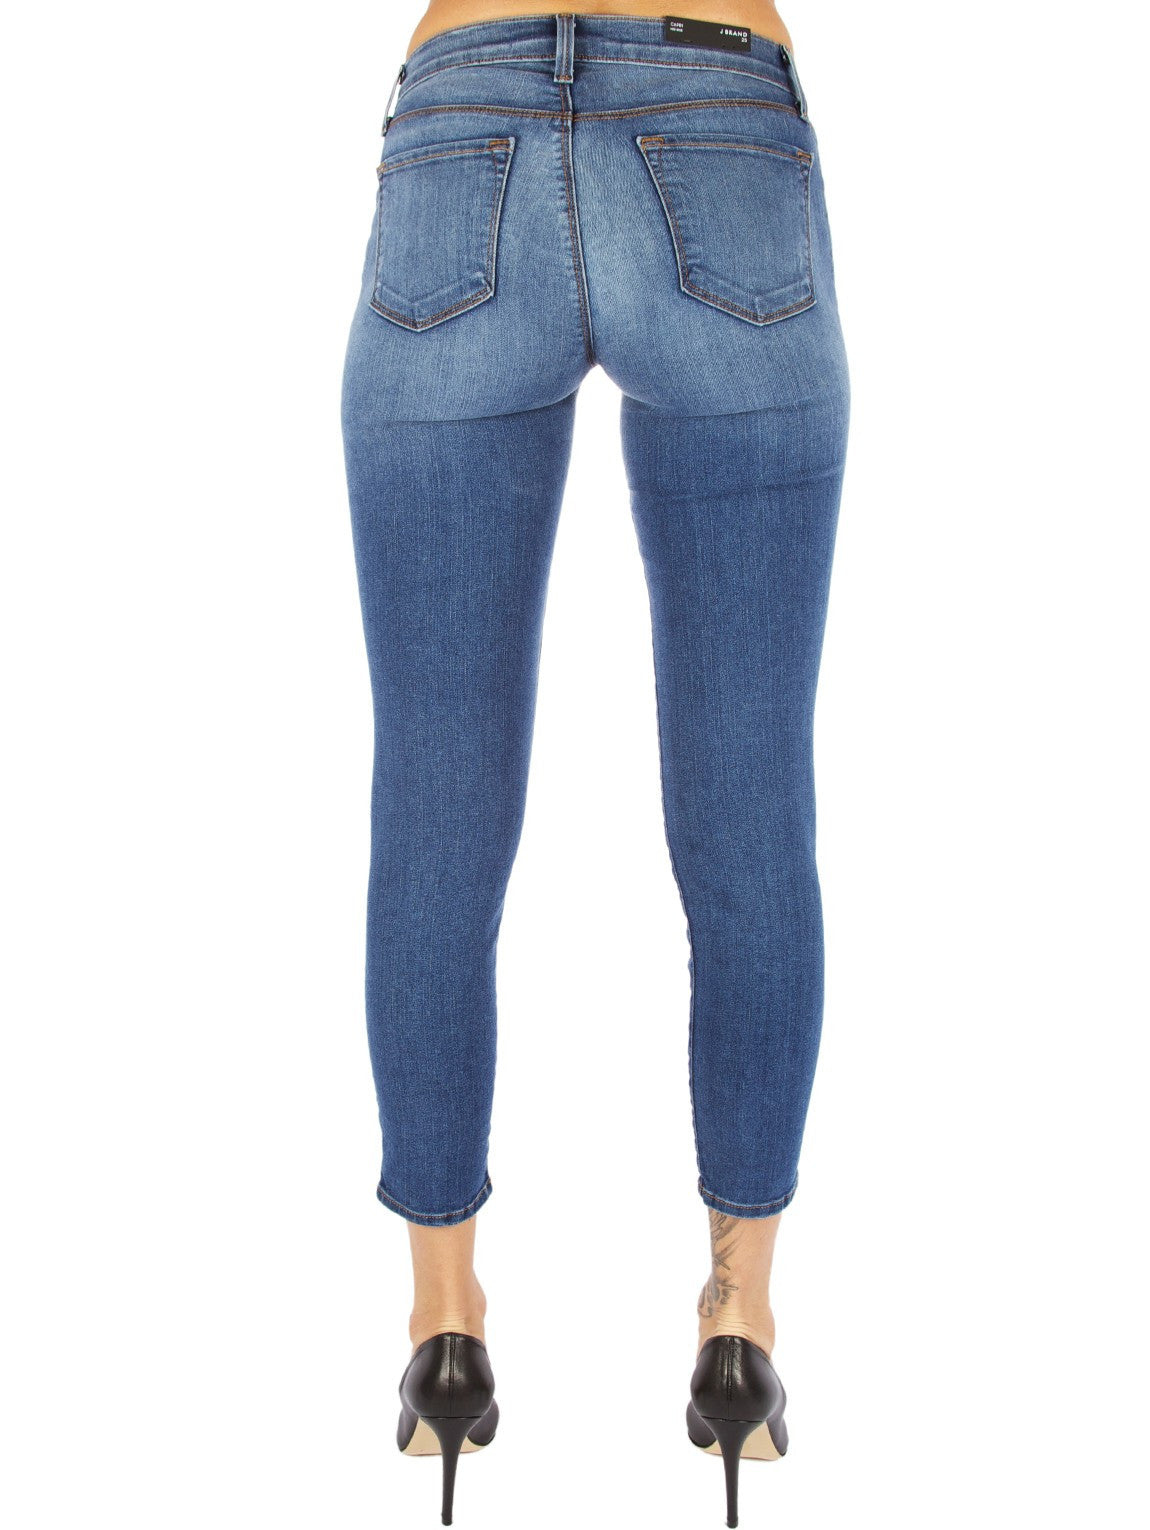 835 Mid-Rise Capri NAVY-Jeans-J brand-TRYME Shop